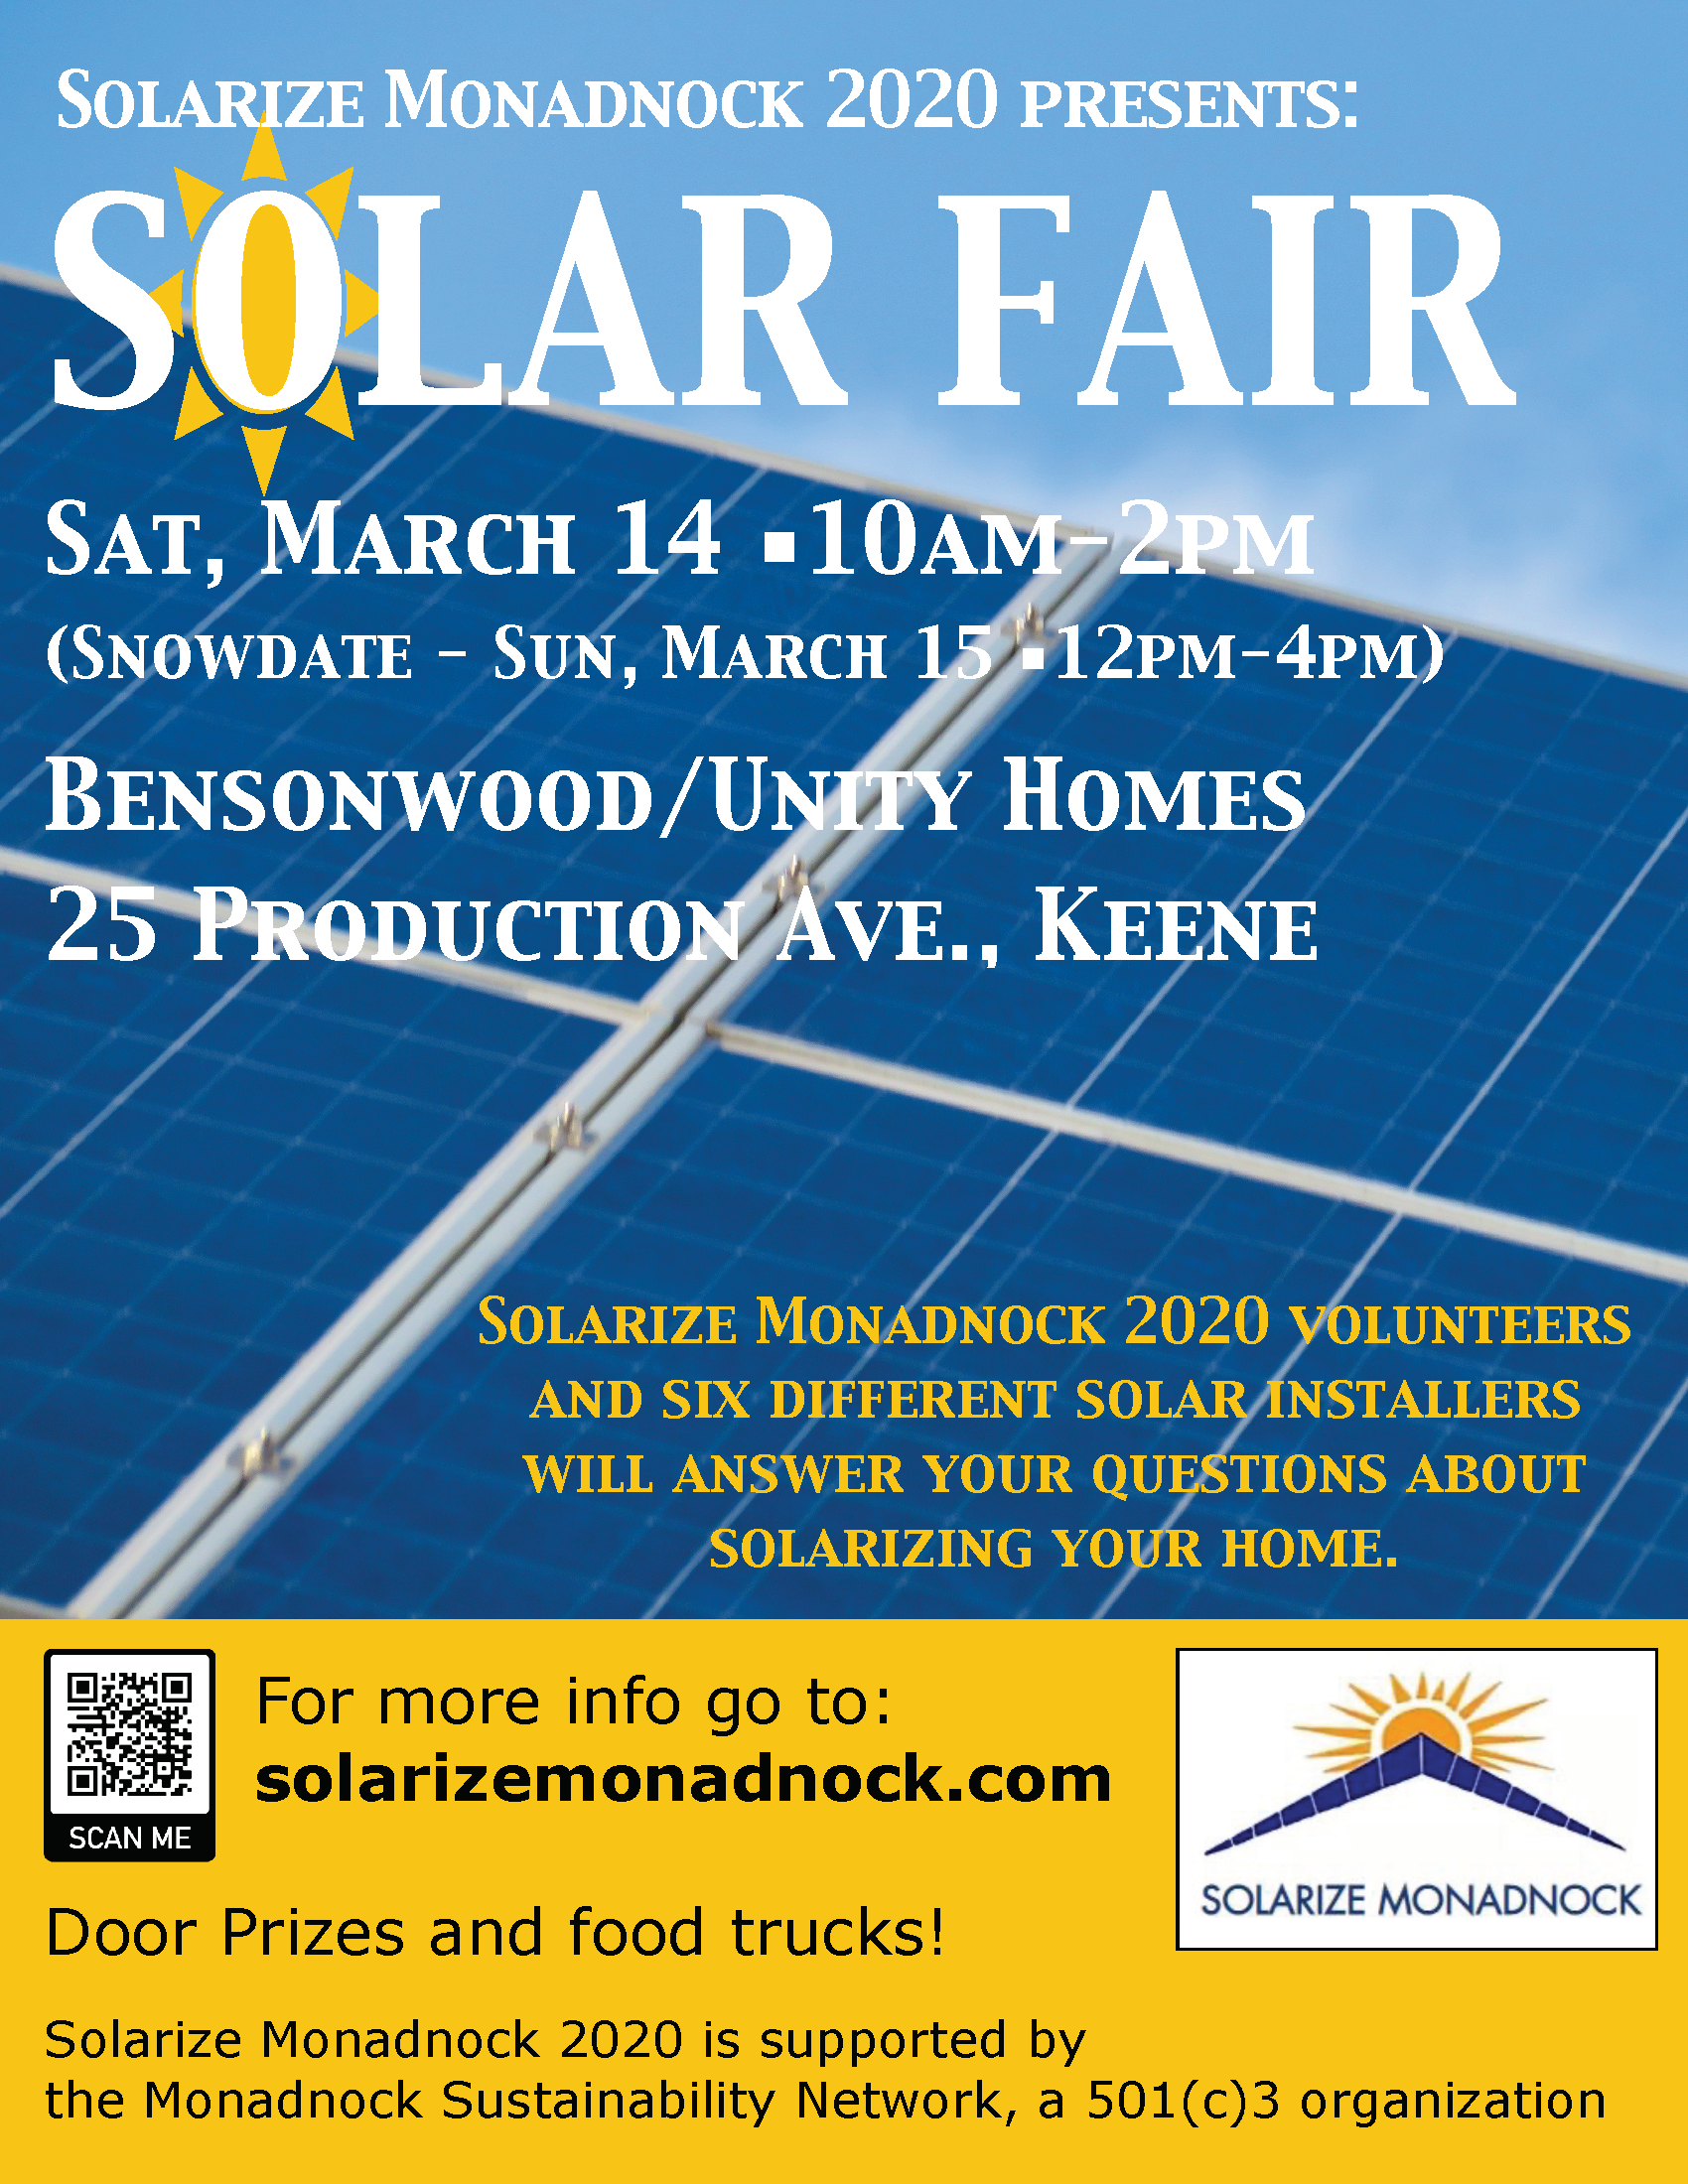 Solar Fair March 14, 2020